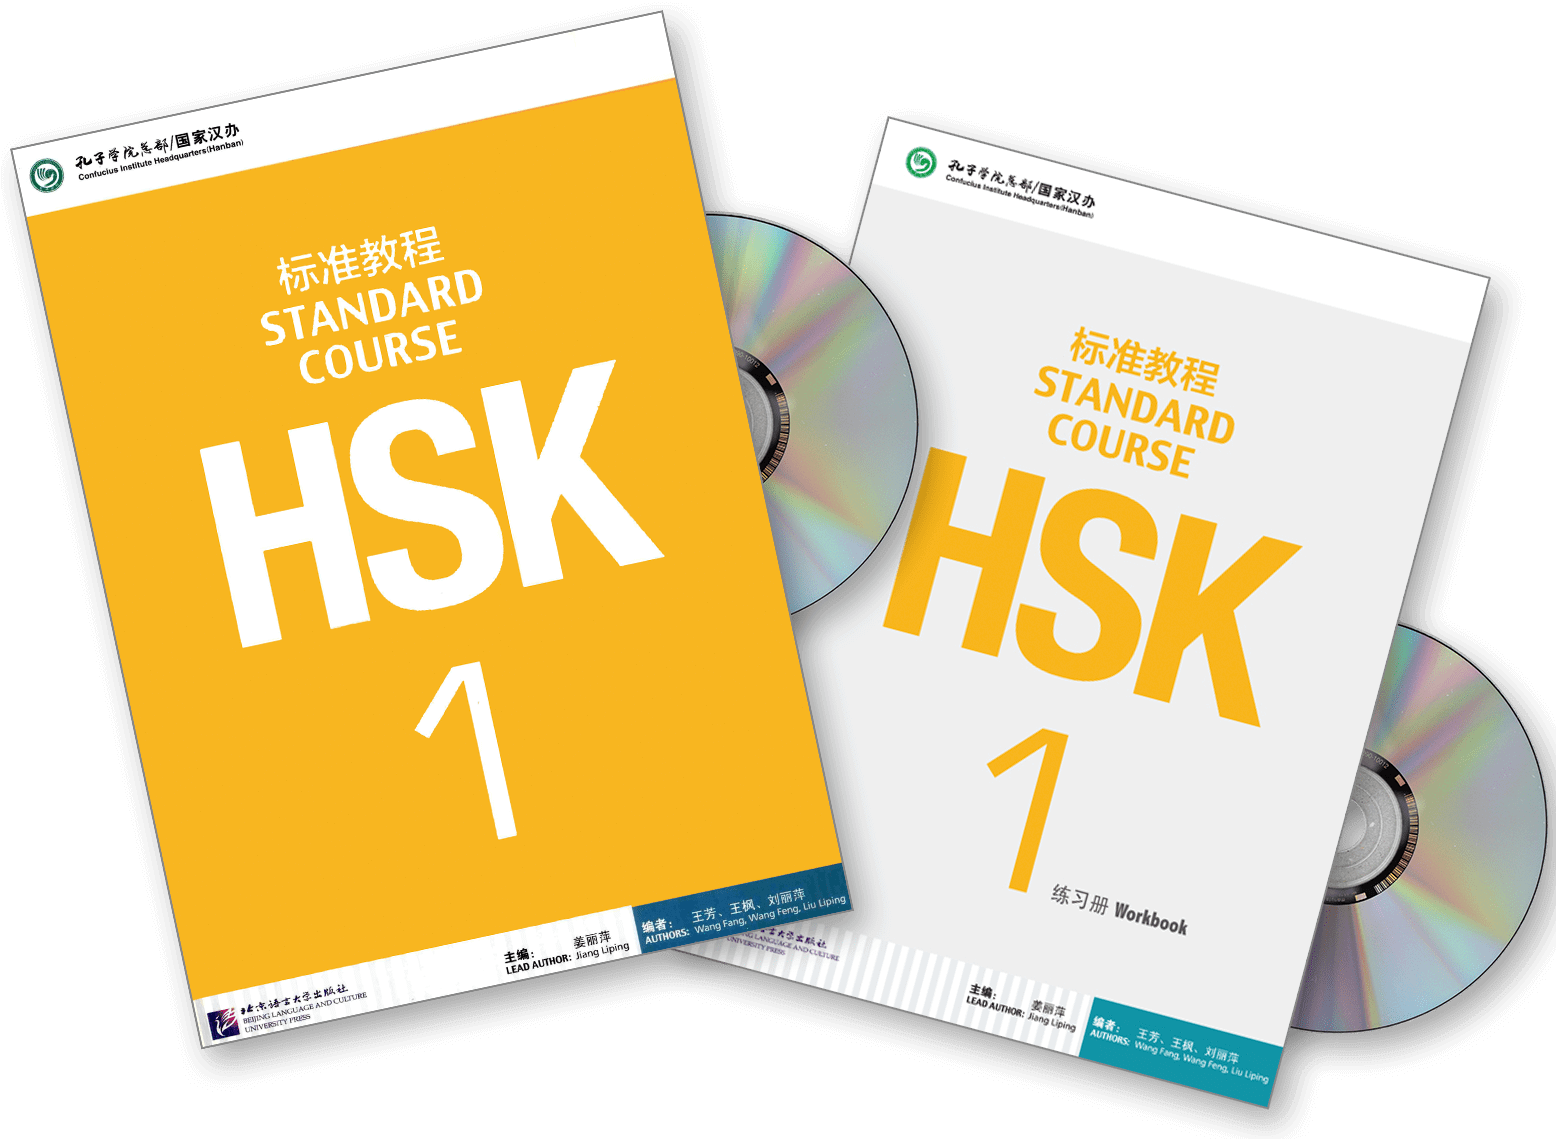 hsk 1 standard course workbook pdf